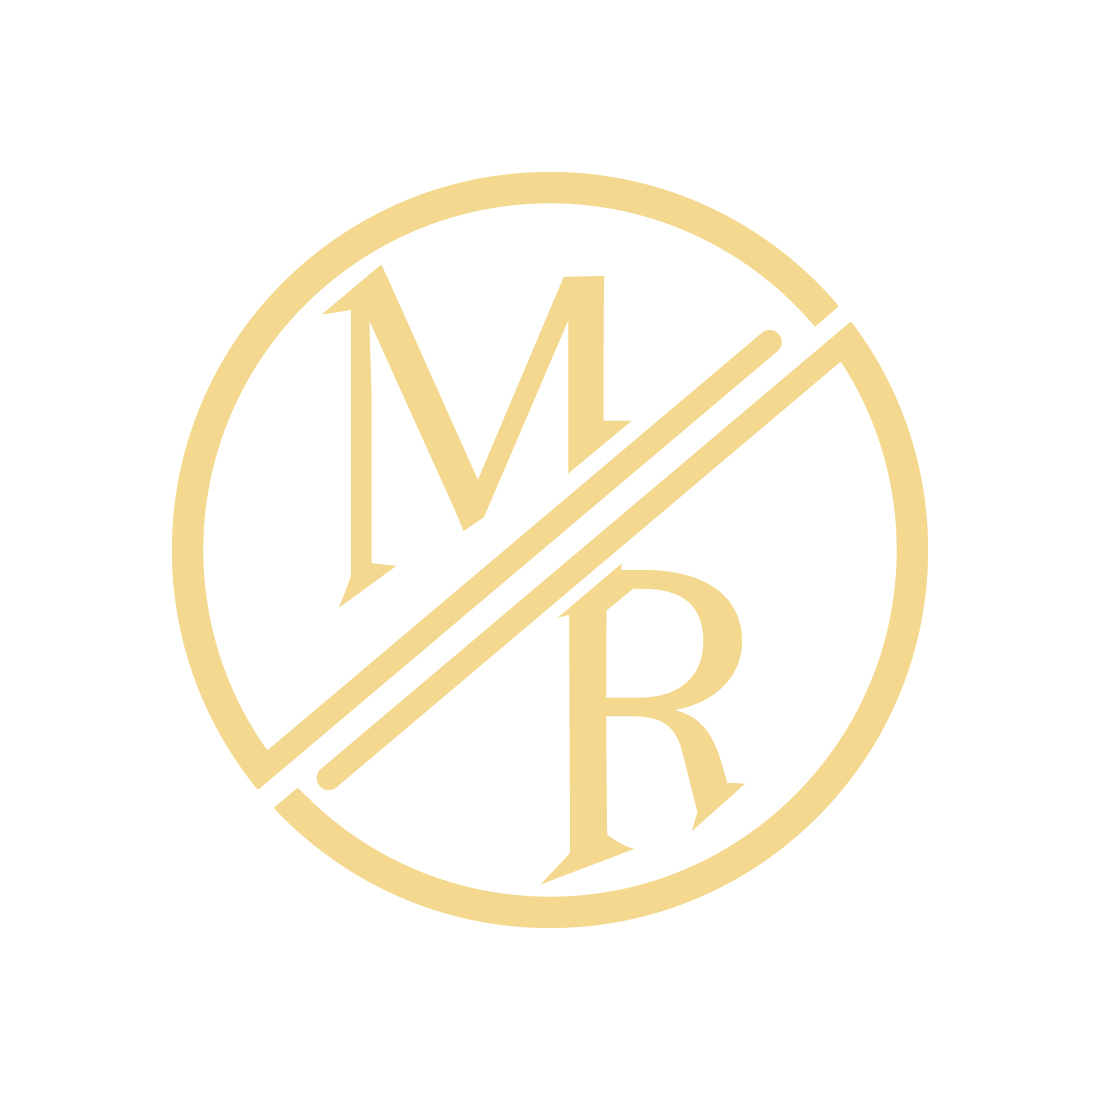 Luxury MR letters logo design vector images MR logo circle logo monogram illustration RM logo best identity preview image.